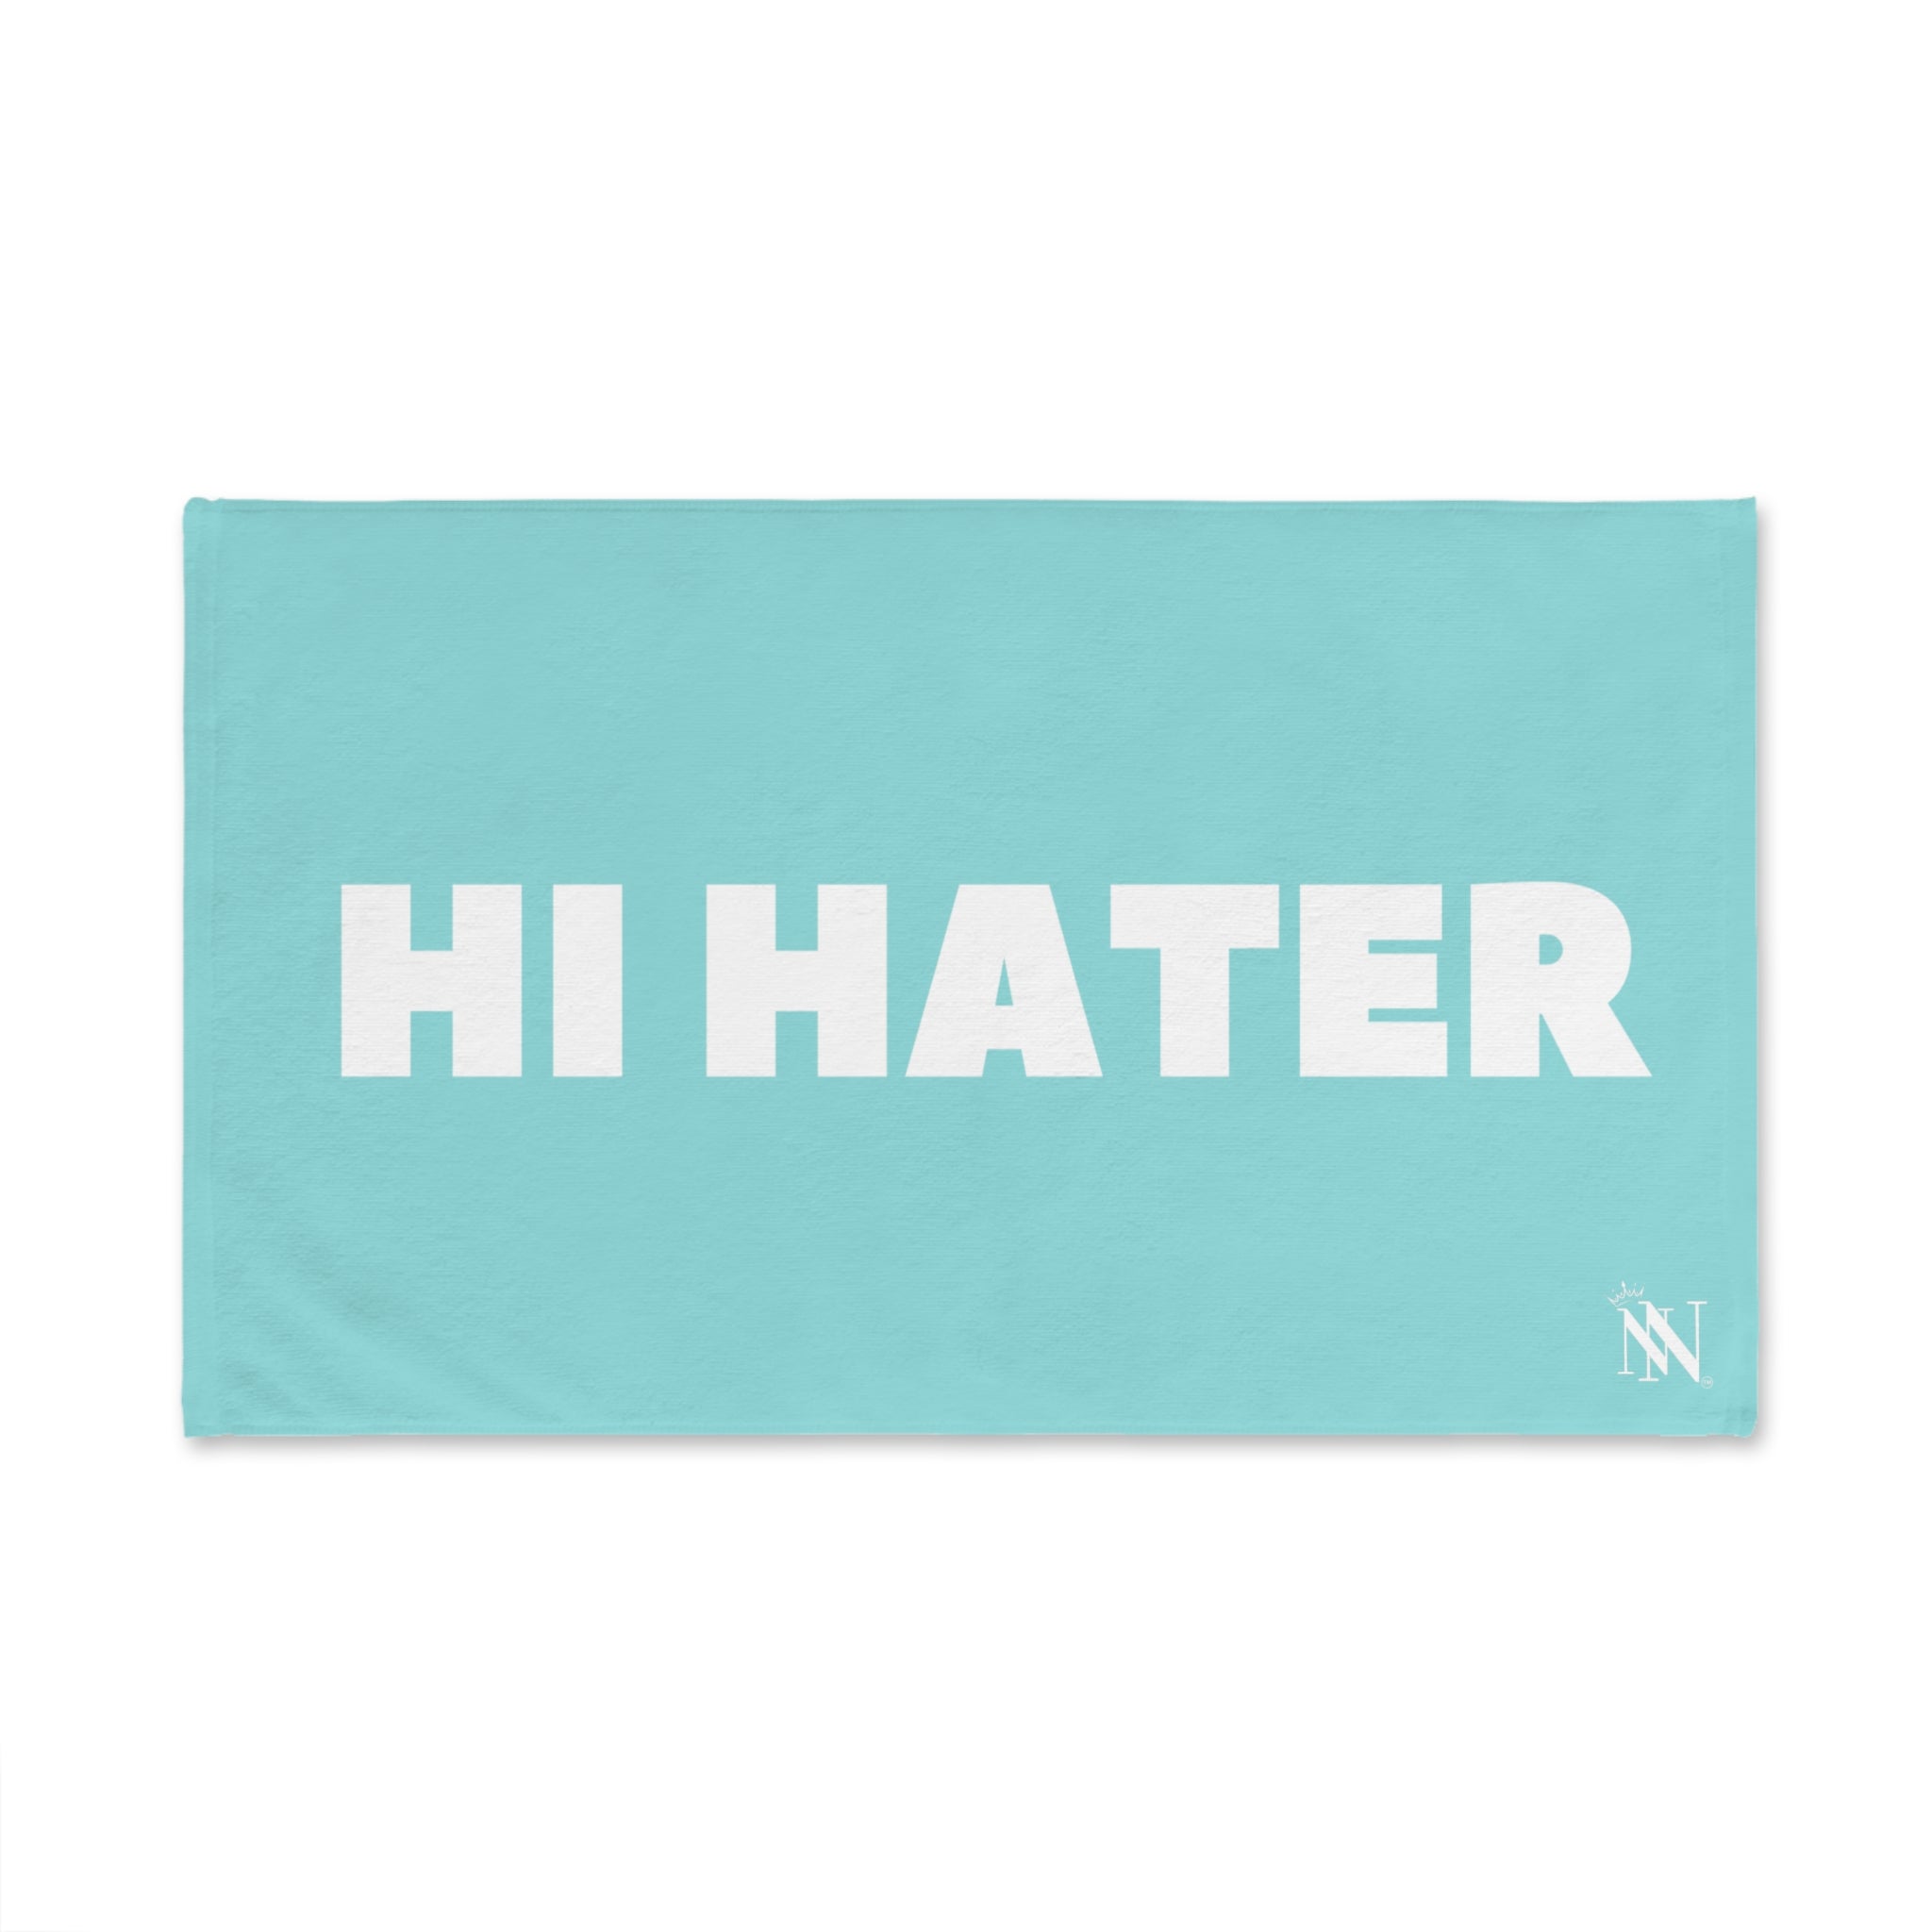 Hater sex towel